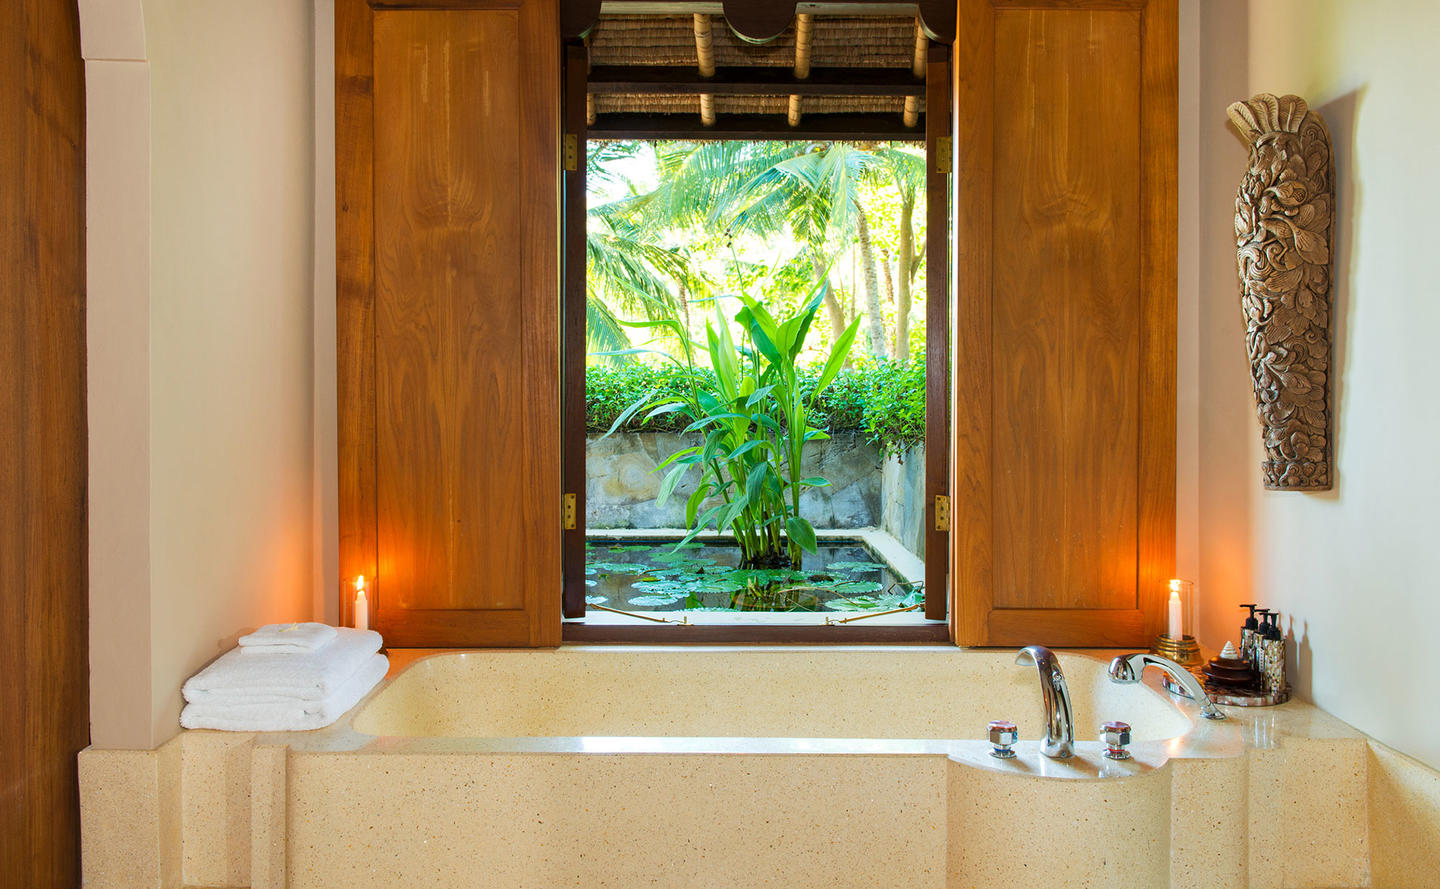 Bathroom, Indrakila Suite - Amankila, Bali, Indonesia